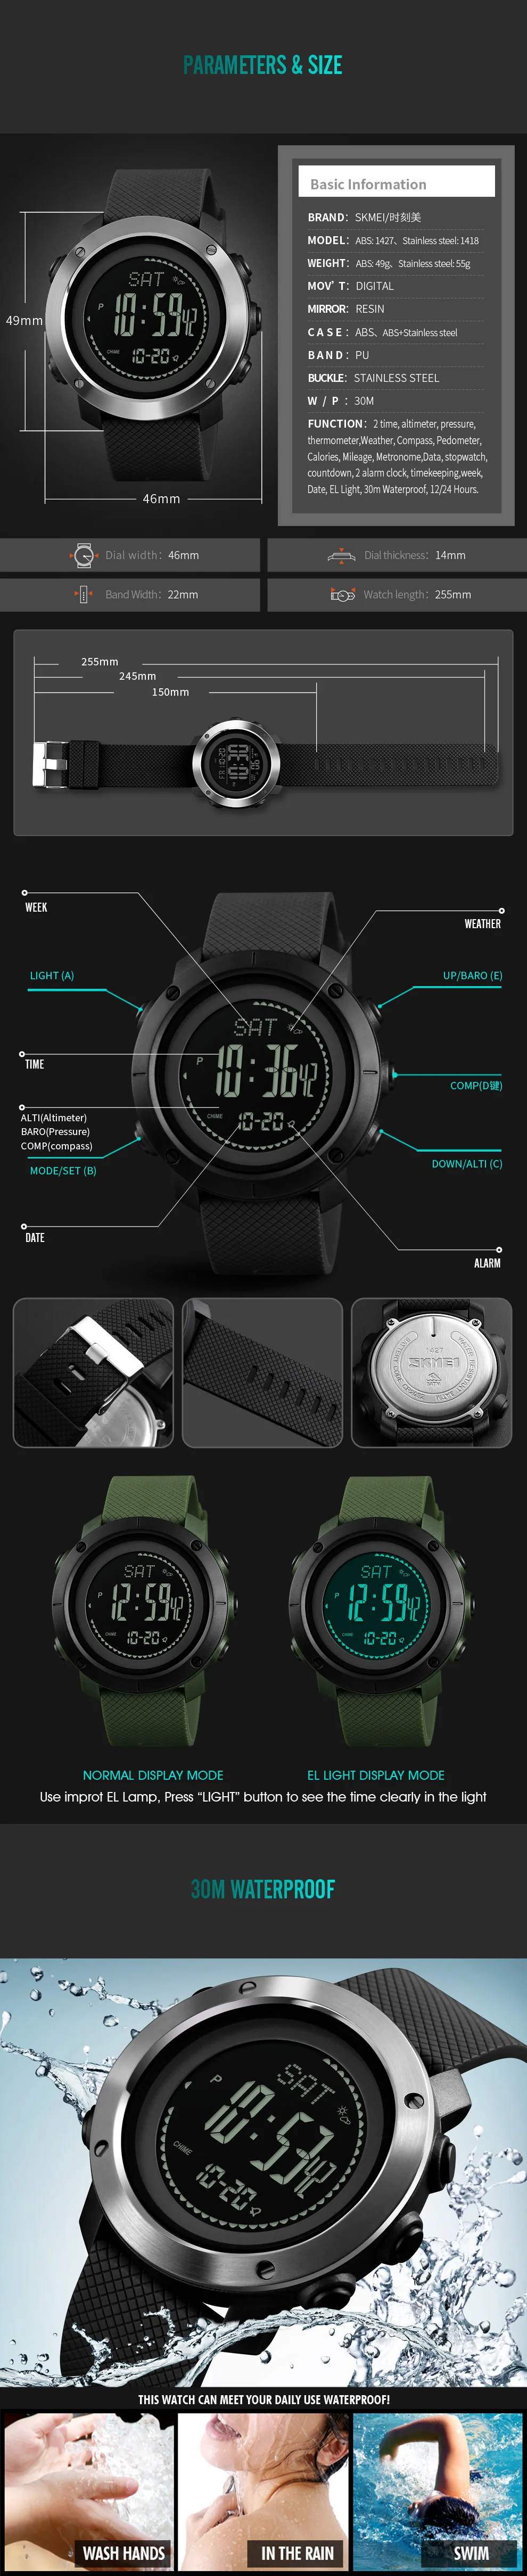 SKMEI 1427 Multifunction Compass Digital Watch Men Waterproof Sports Military Watches